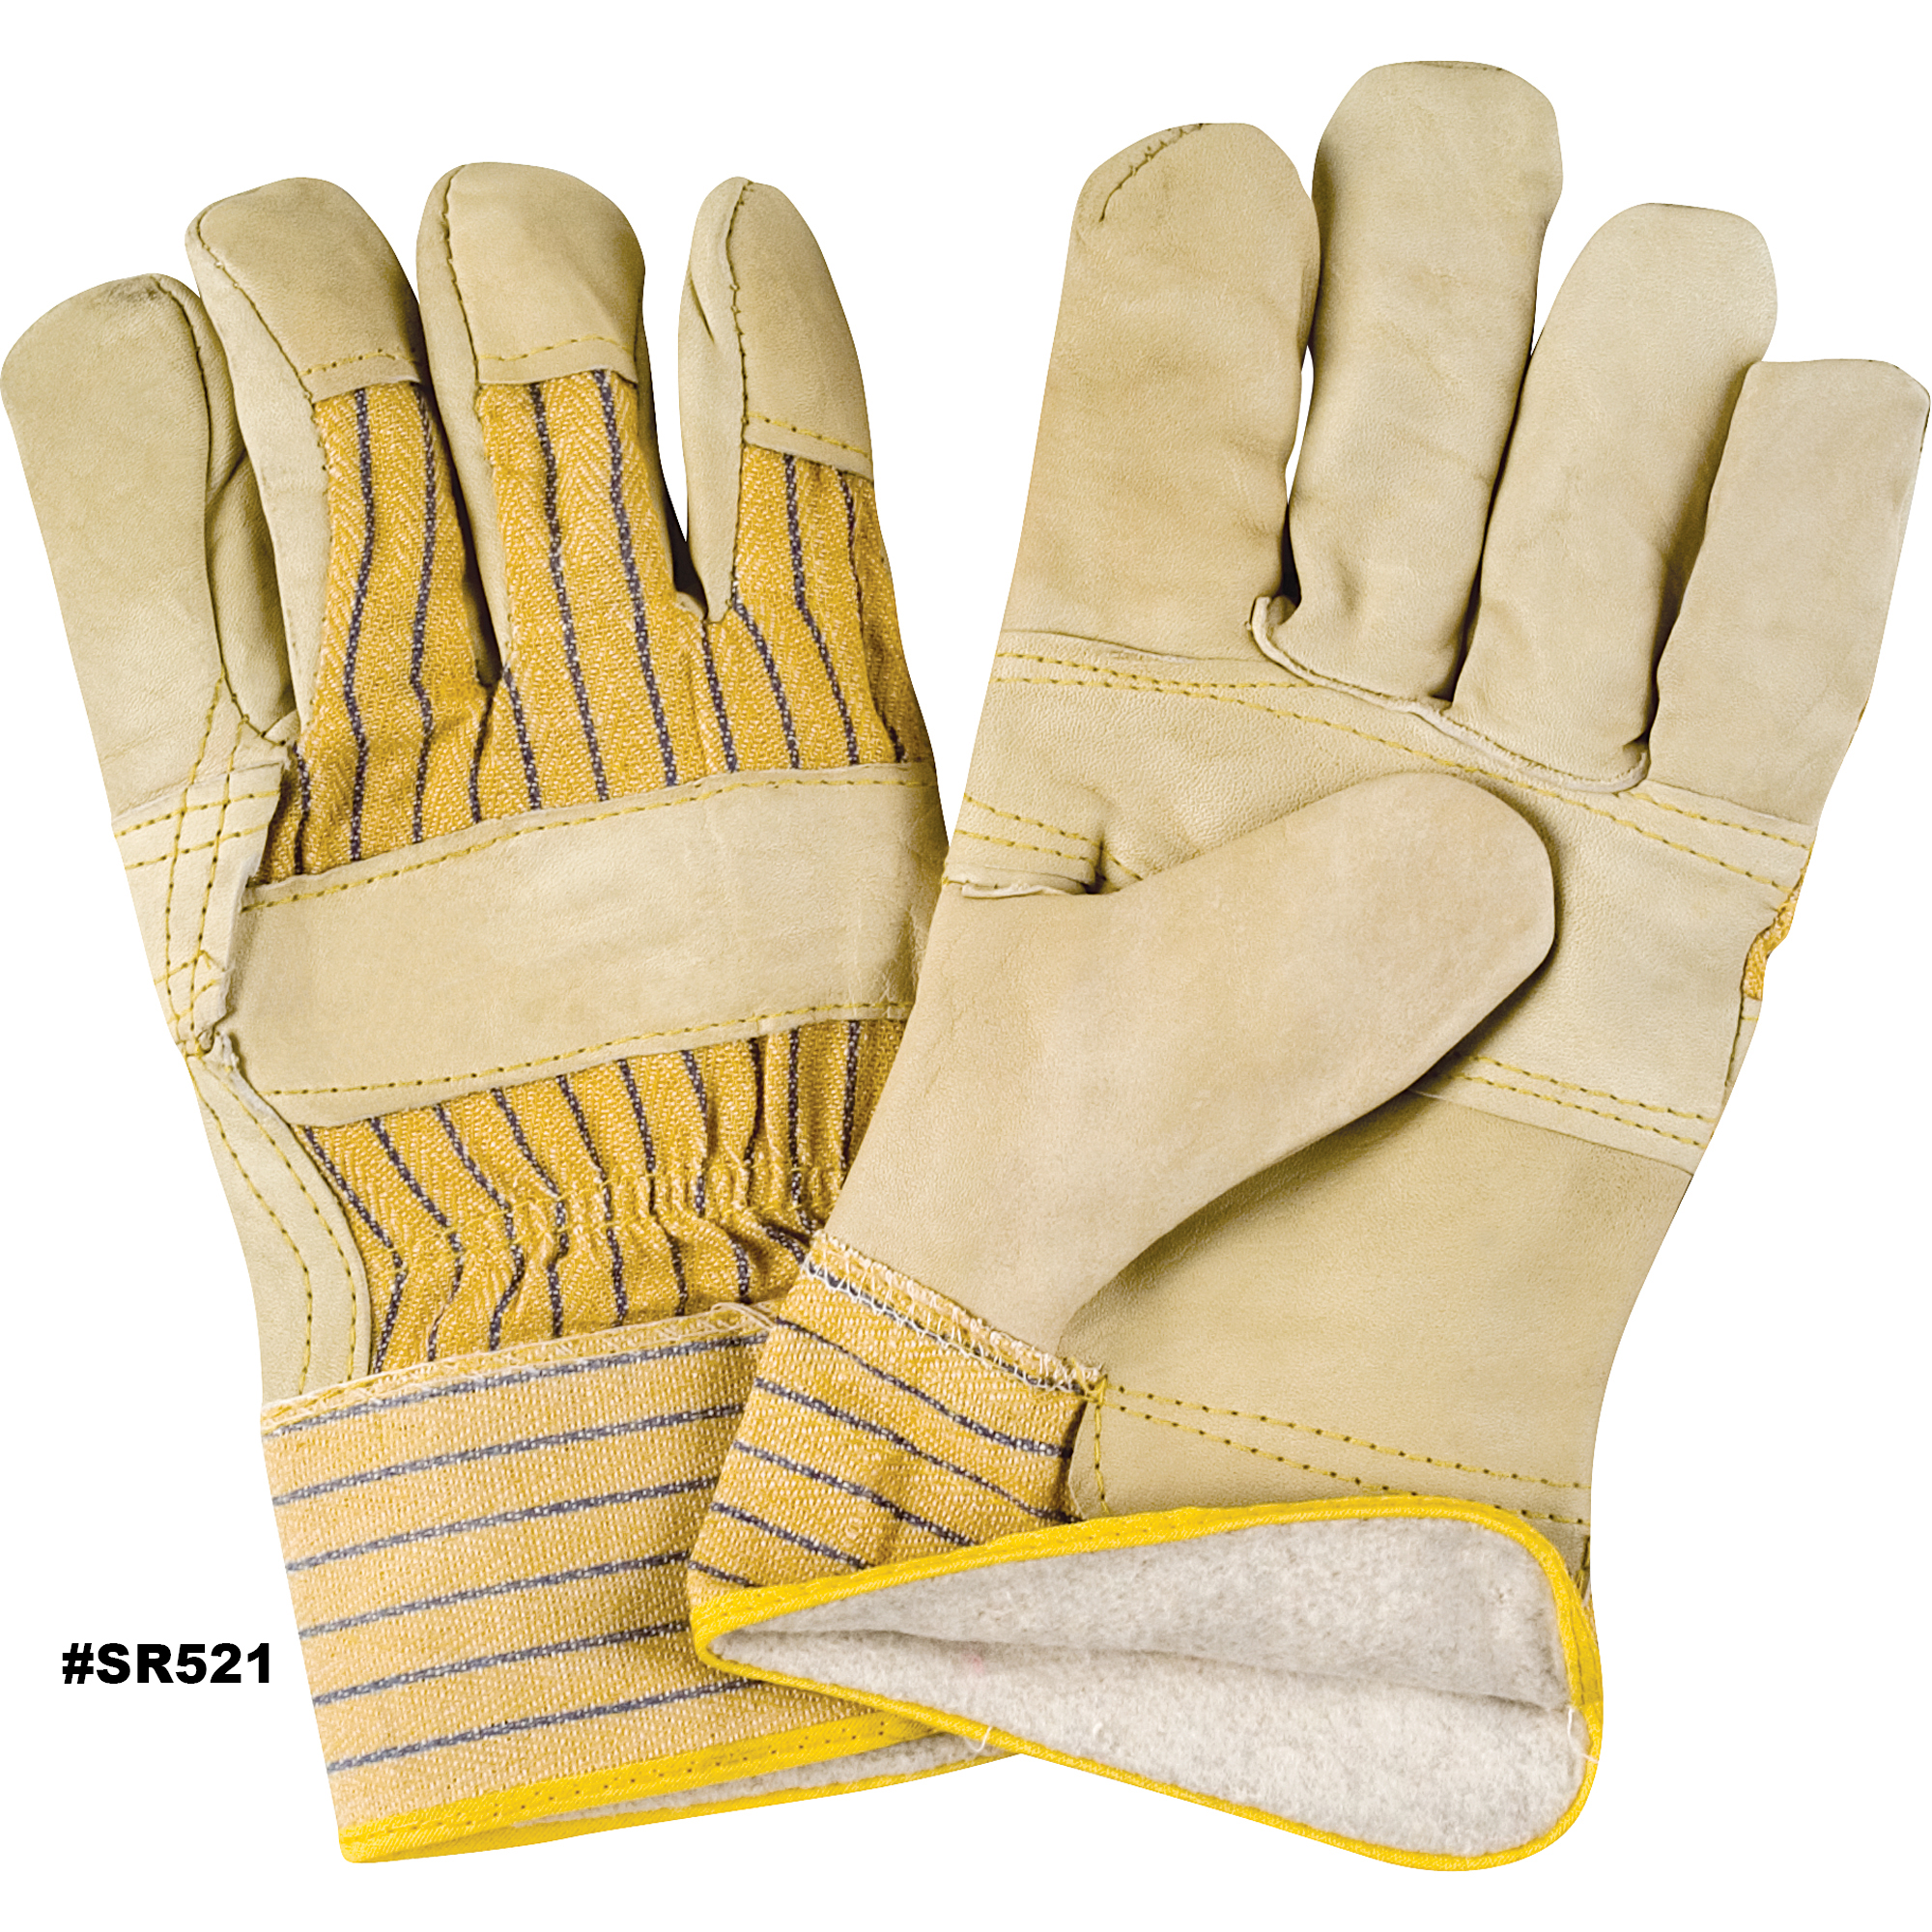 Zenith Fitters Patch Palm Gloves, Large, Grain Cowhide Palm, Cotton Fleece Inner Lining Model: SR521